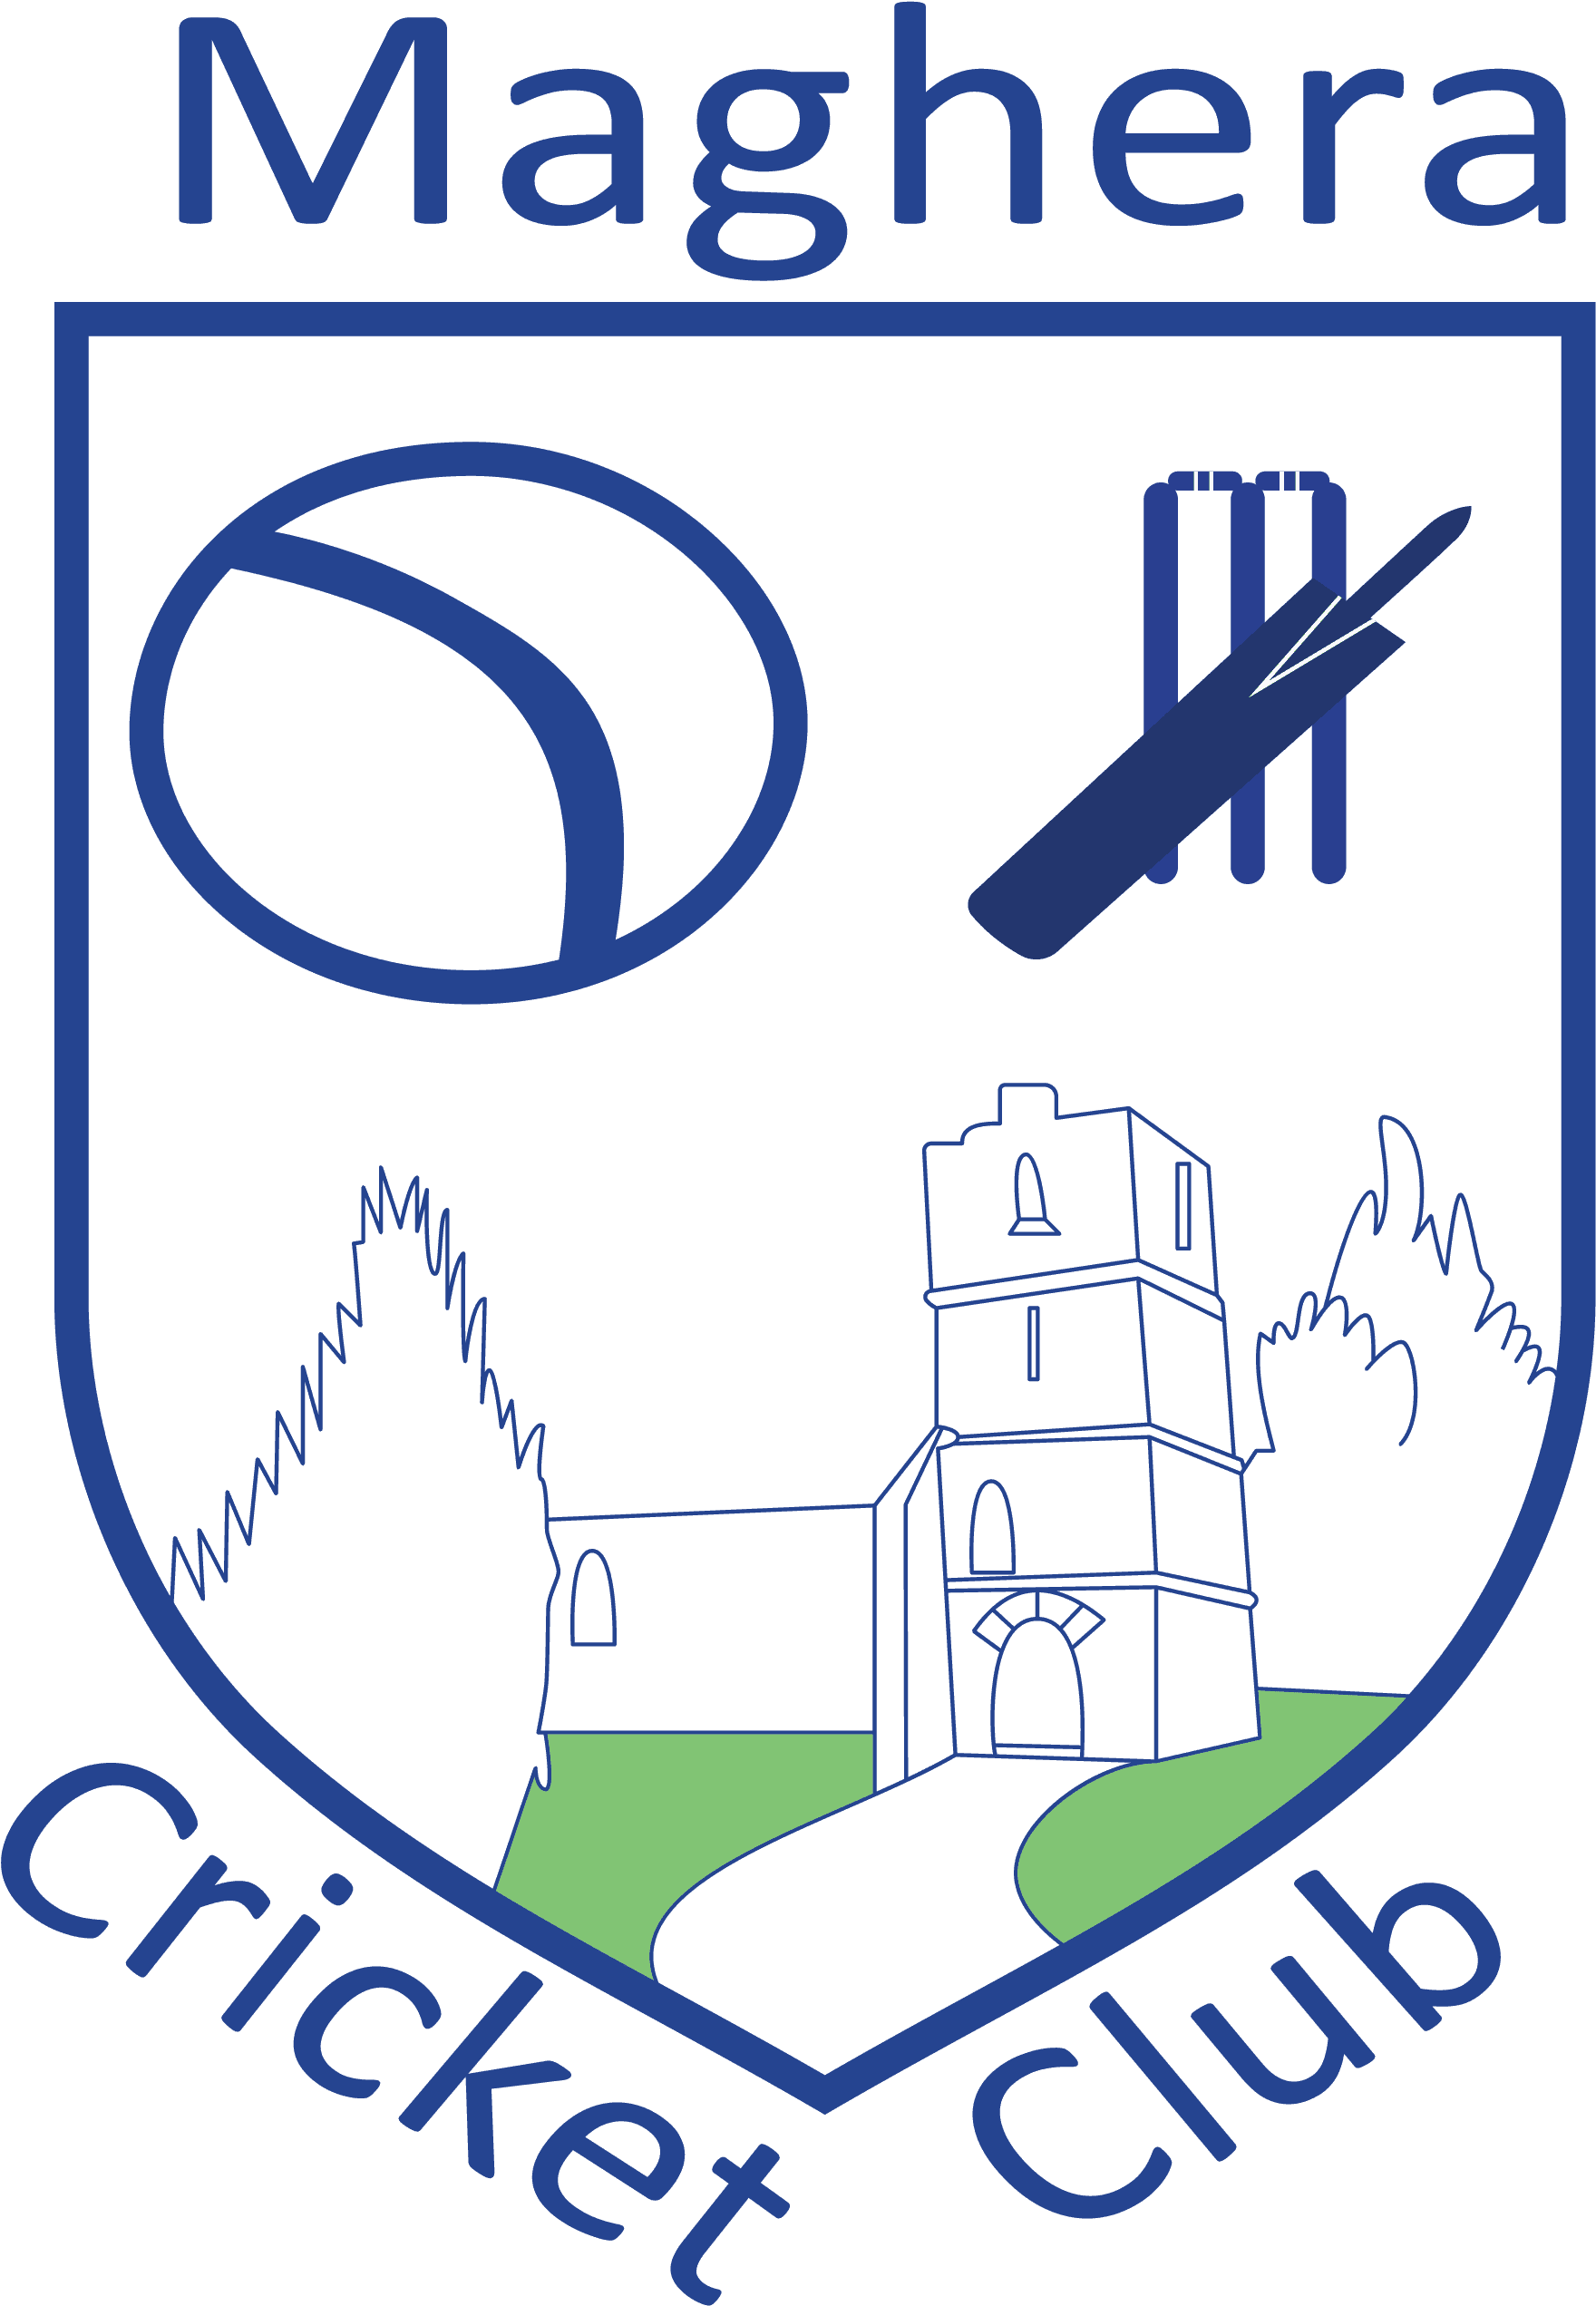 Maghera Cricket Club Logo